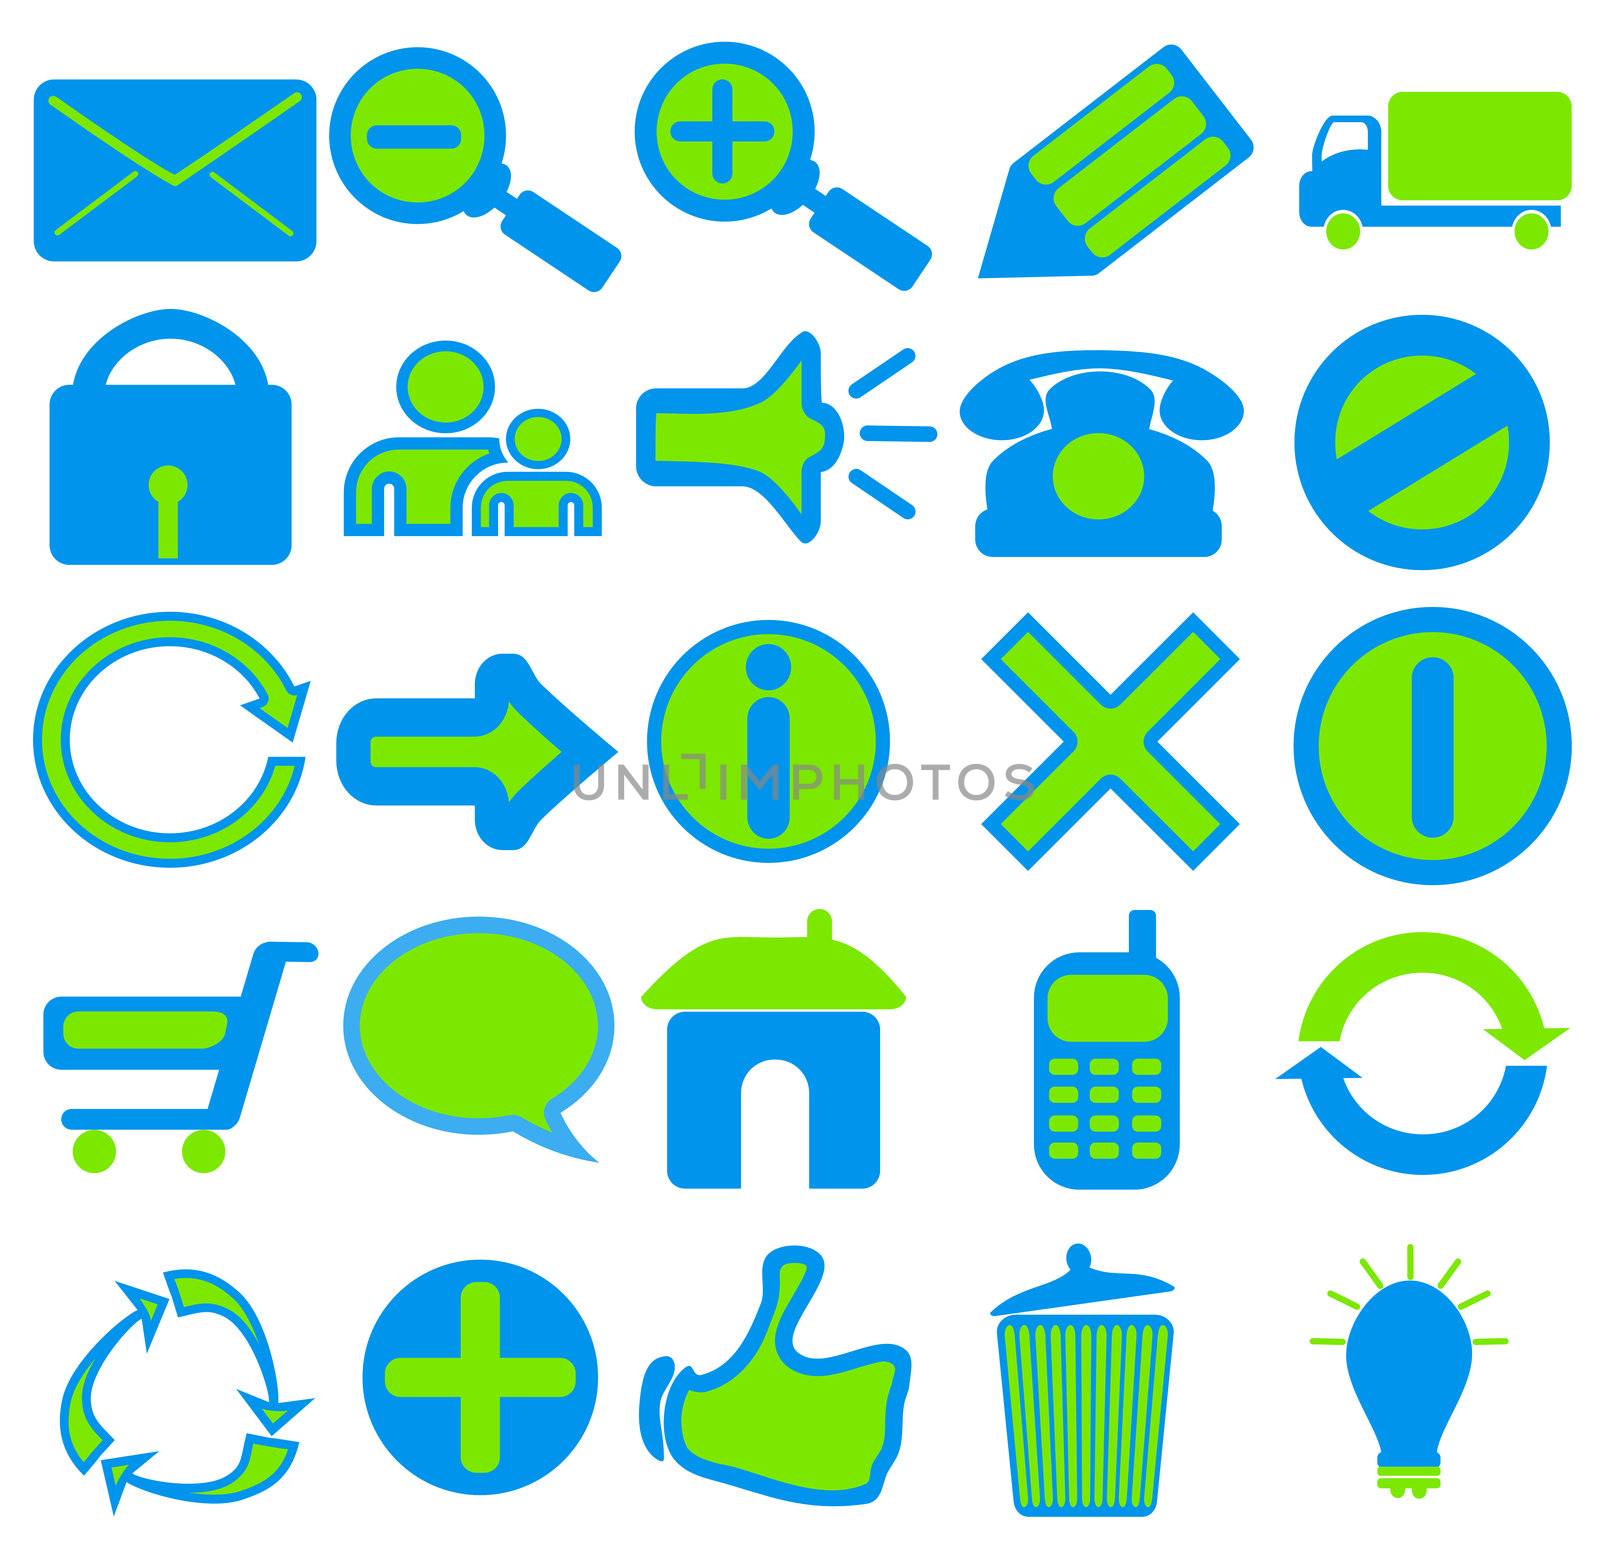 Blue Green Web Icons by RichieThakur